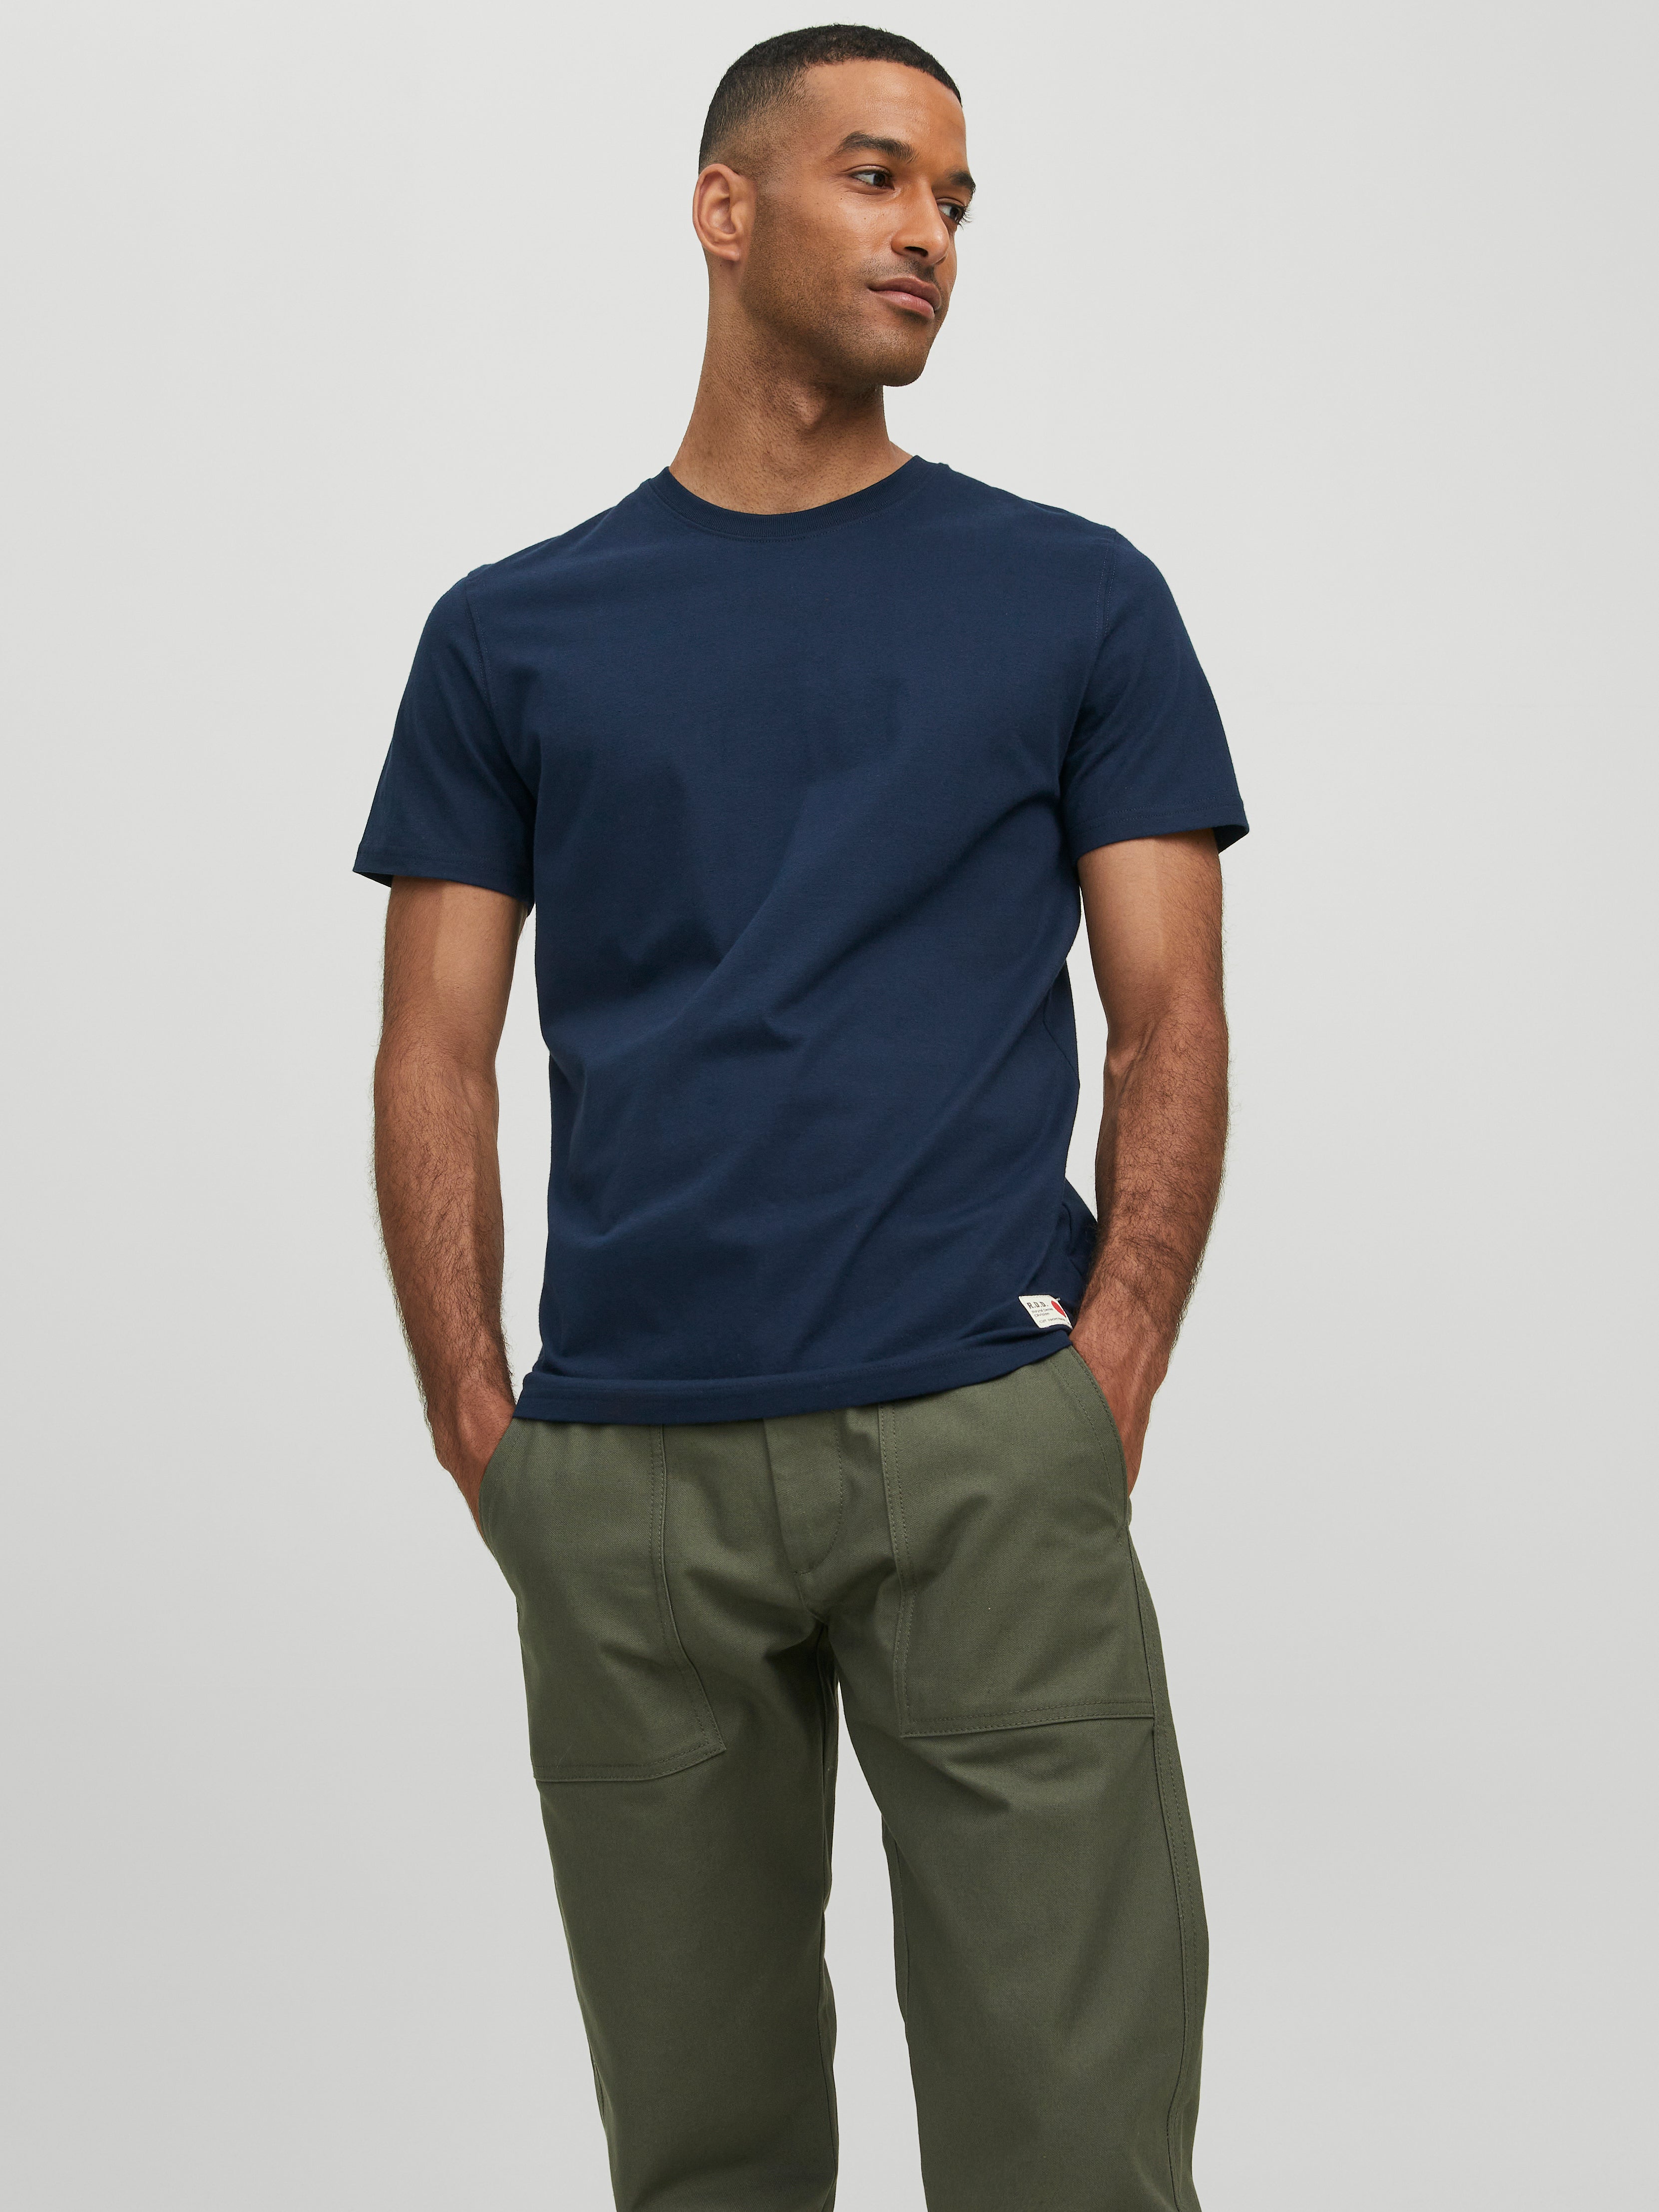 Blue Shirt Khaki Pants – It's a Thing | blue shirt khaki pants